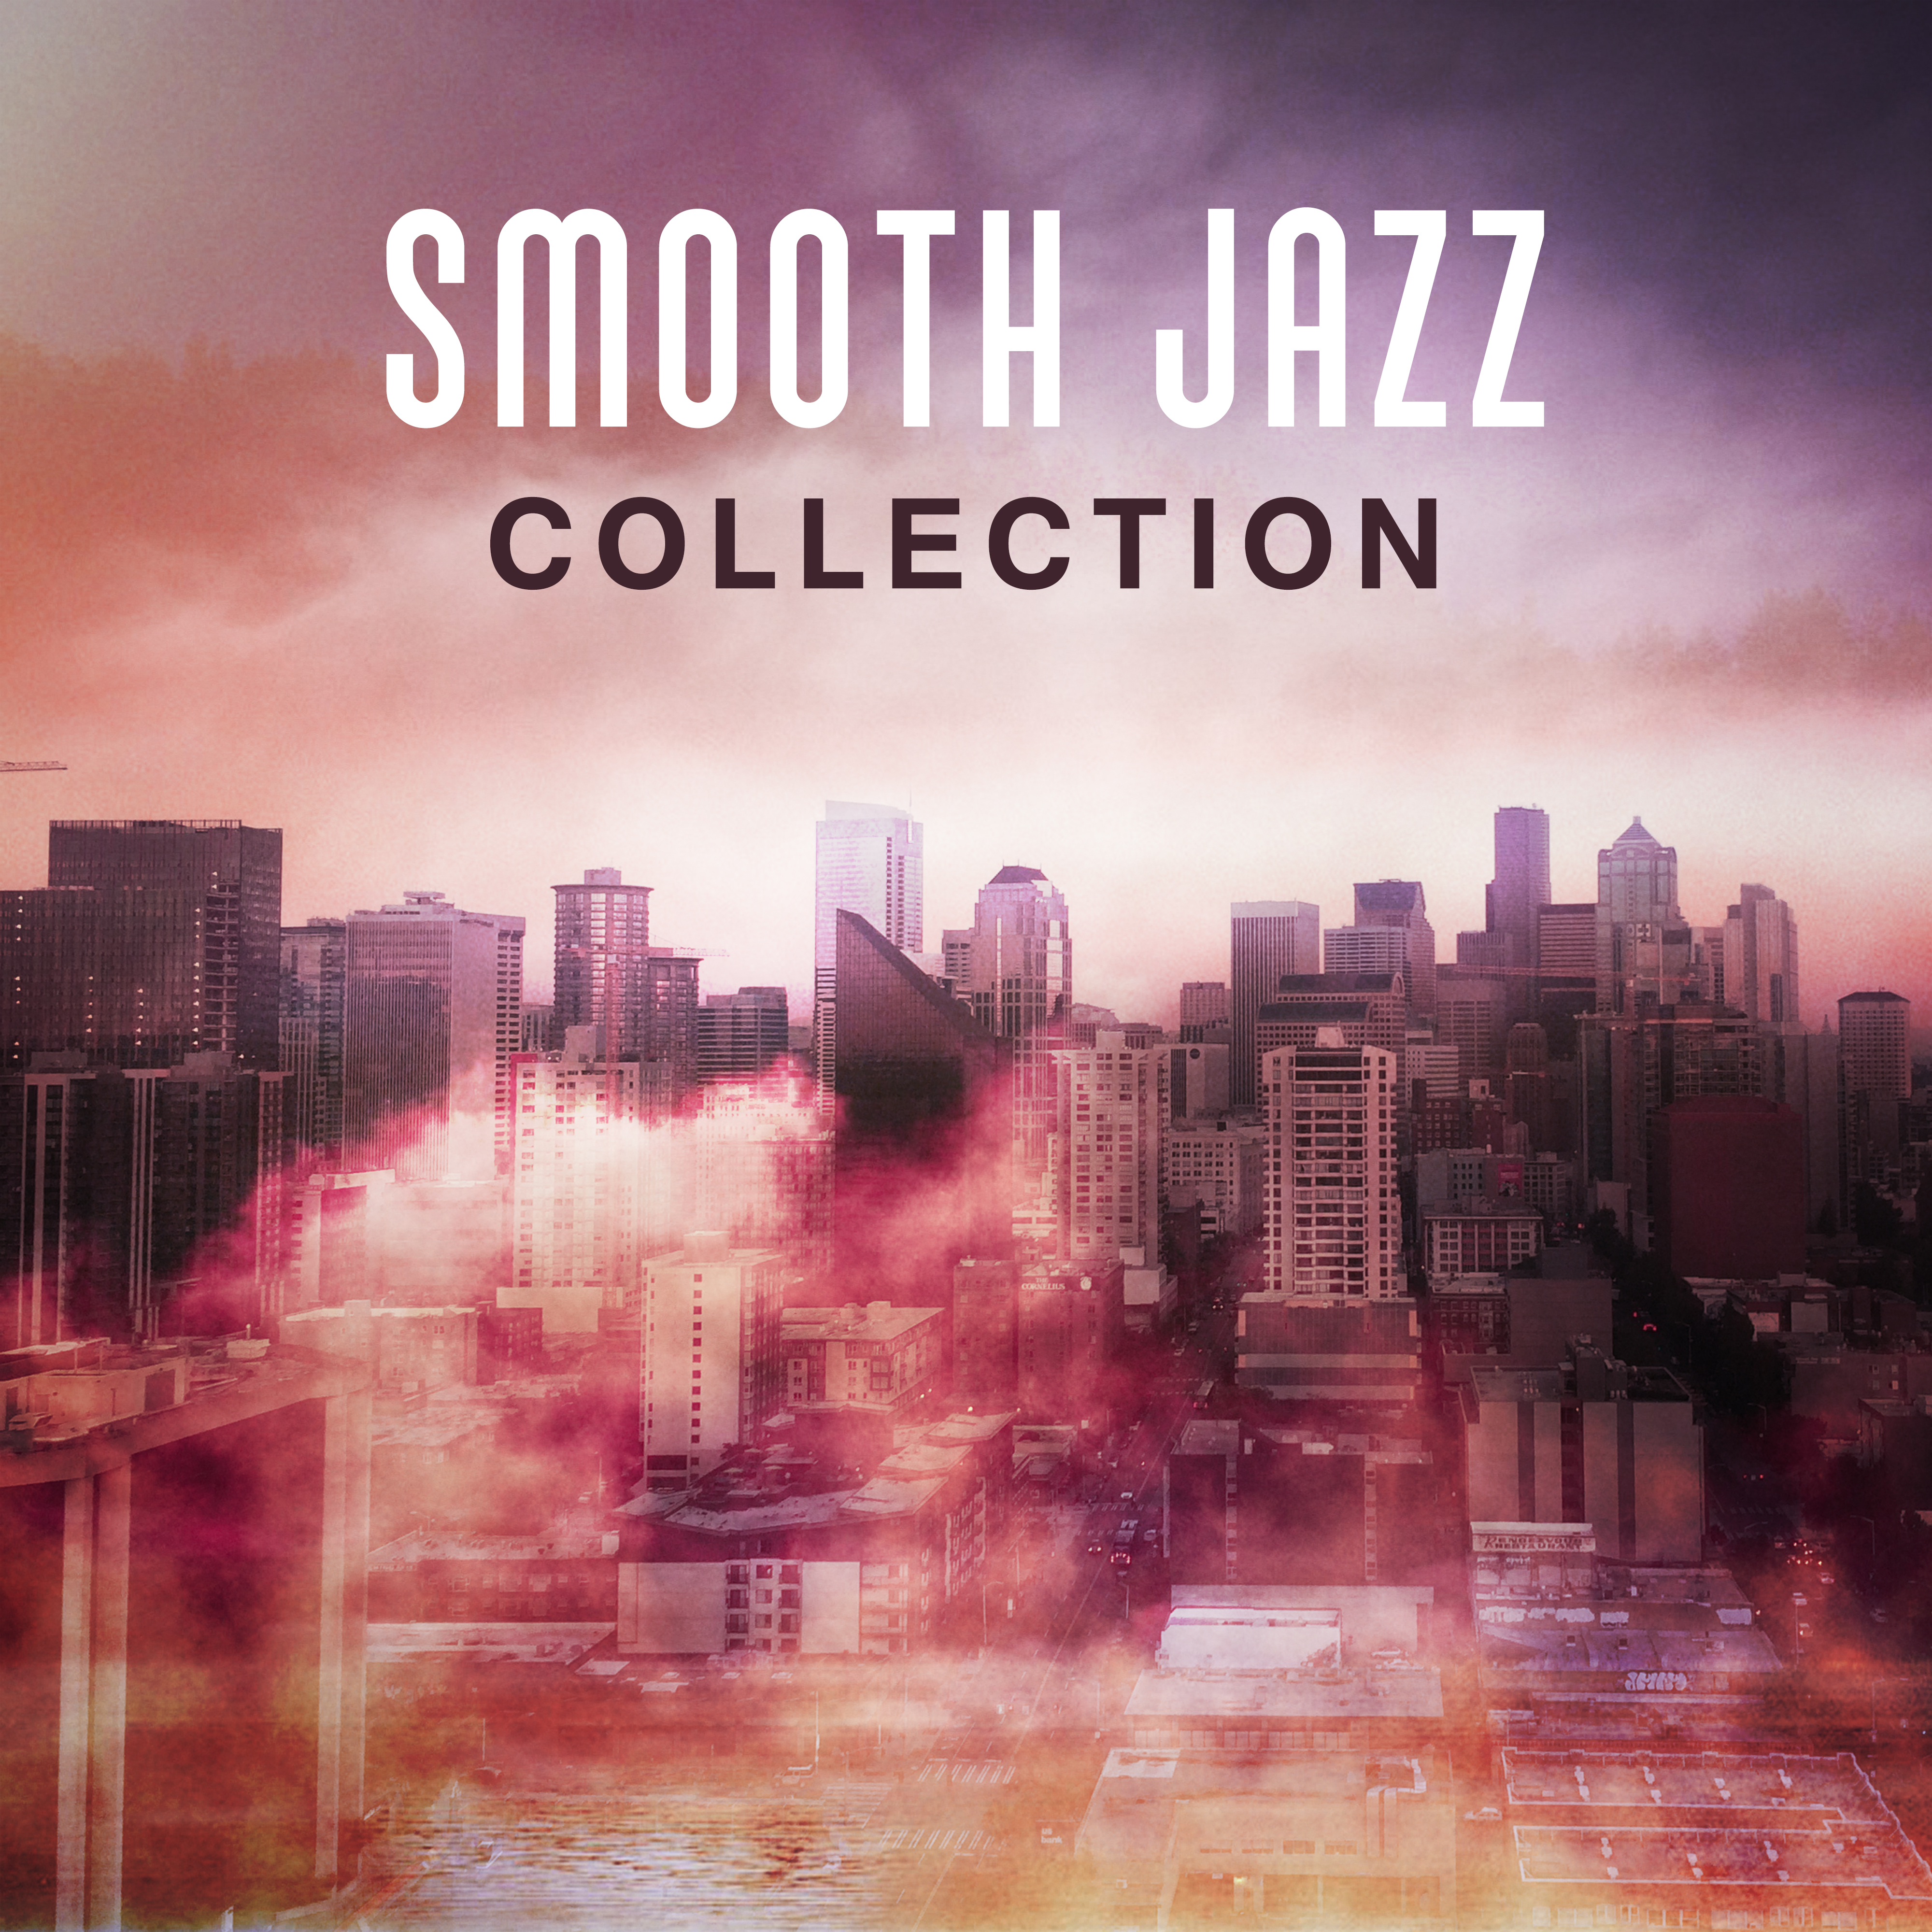 Smooth Jazz Collection  Best Jazz Instrumental 2017, Saxophone  Piano, Jazz Night, Jazz Music Club